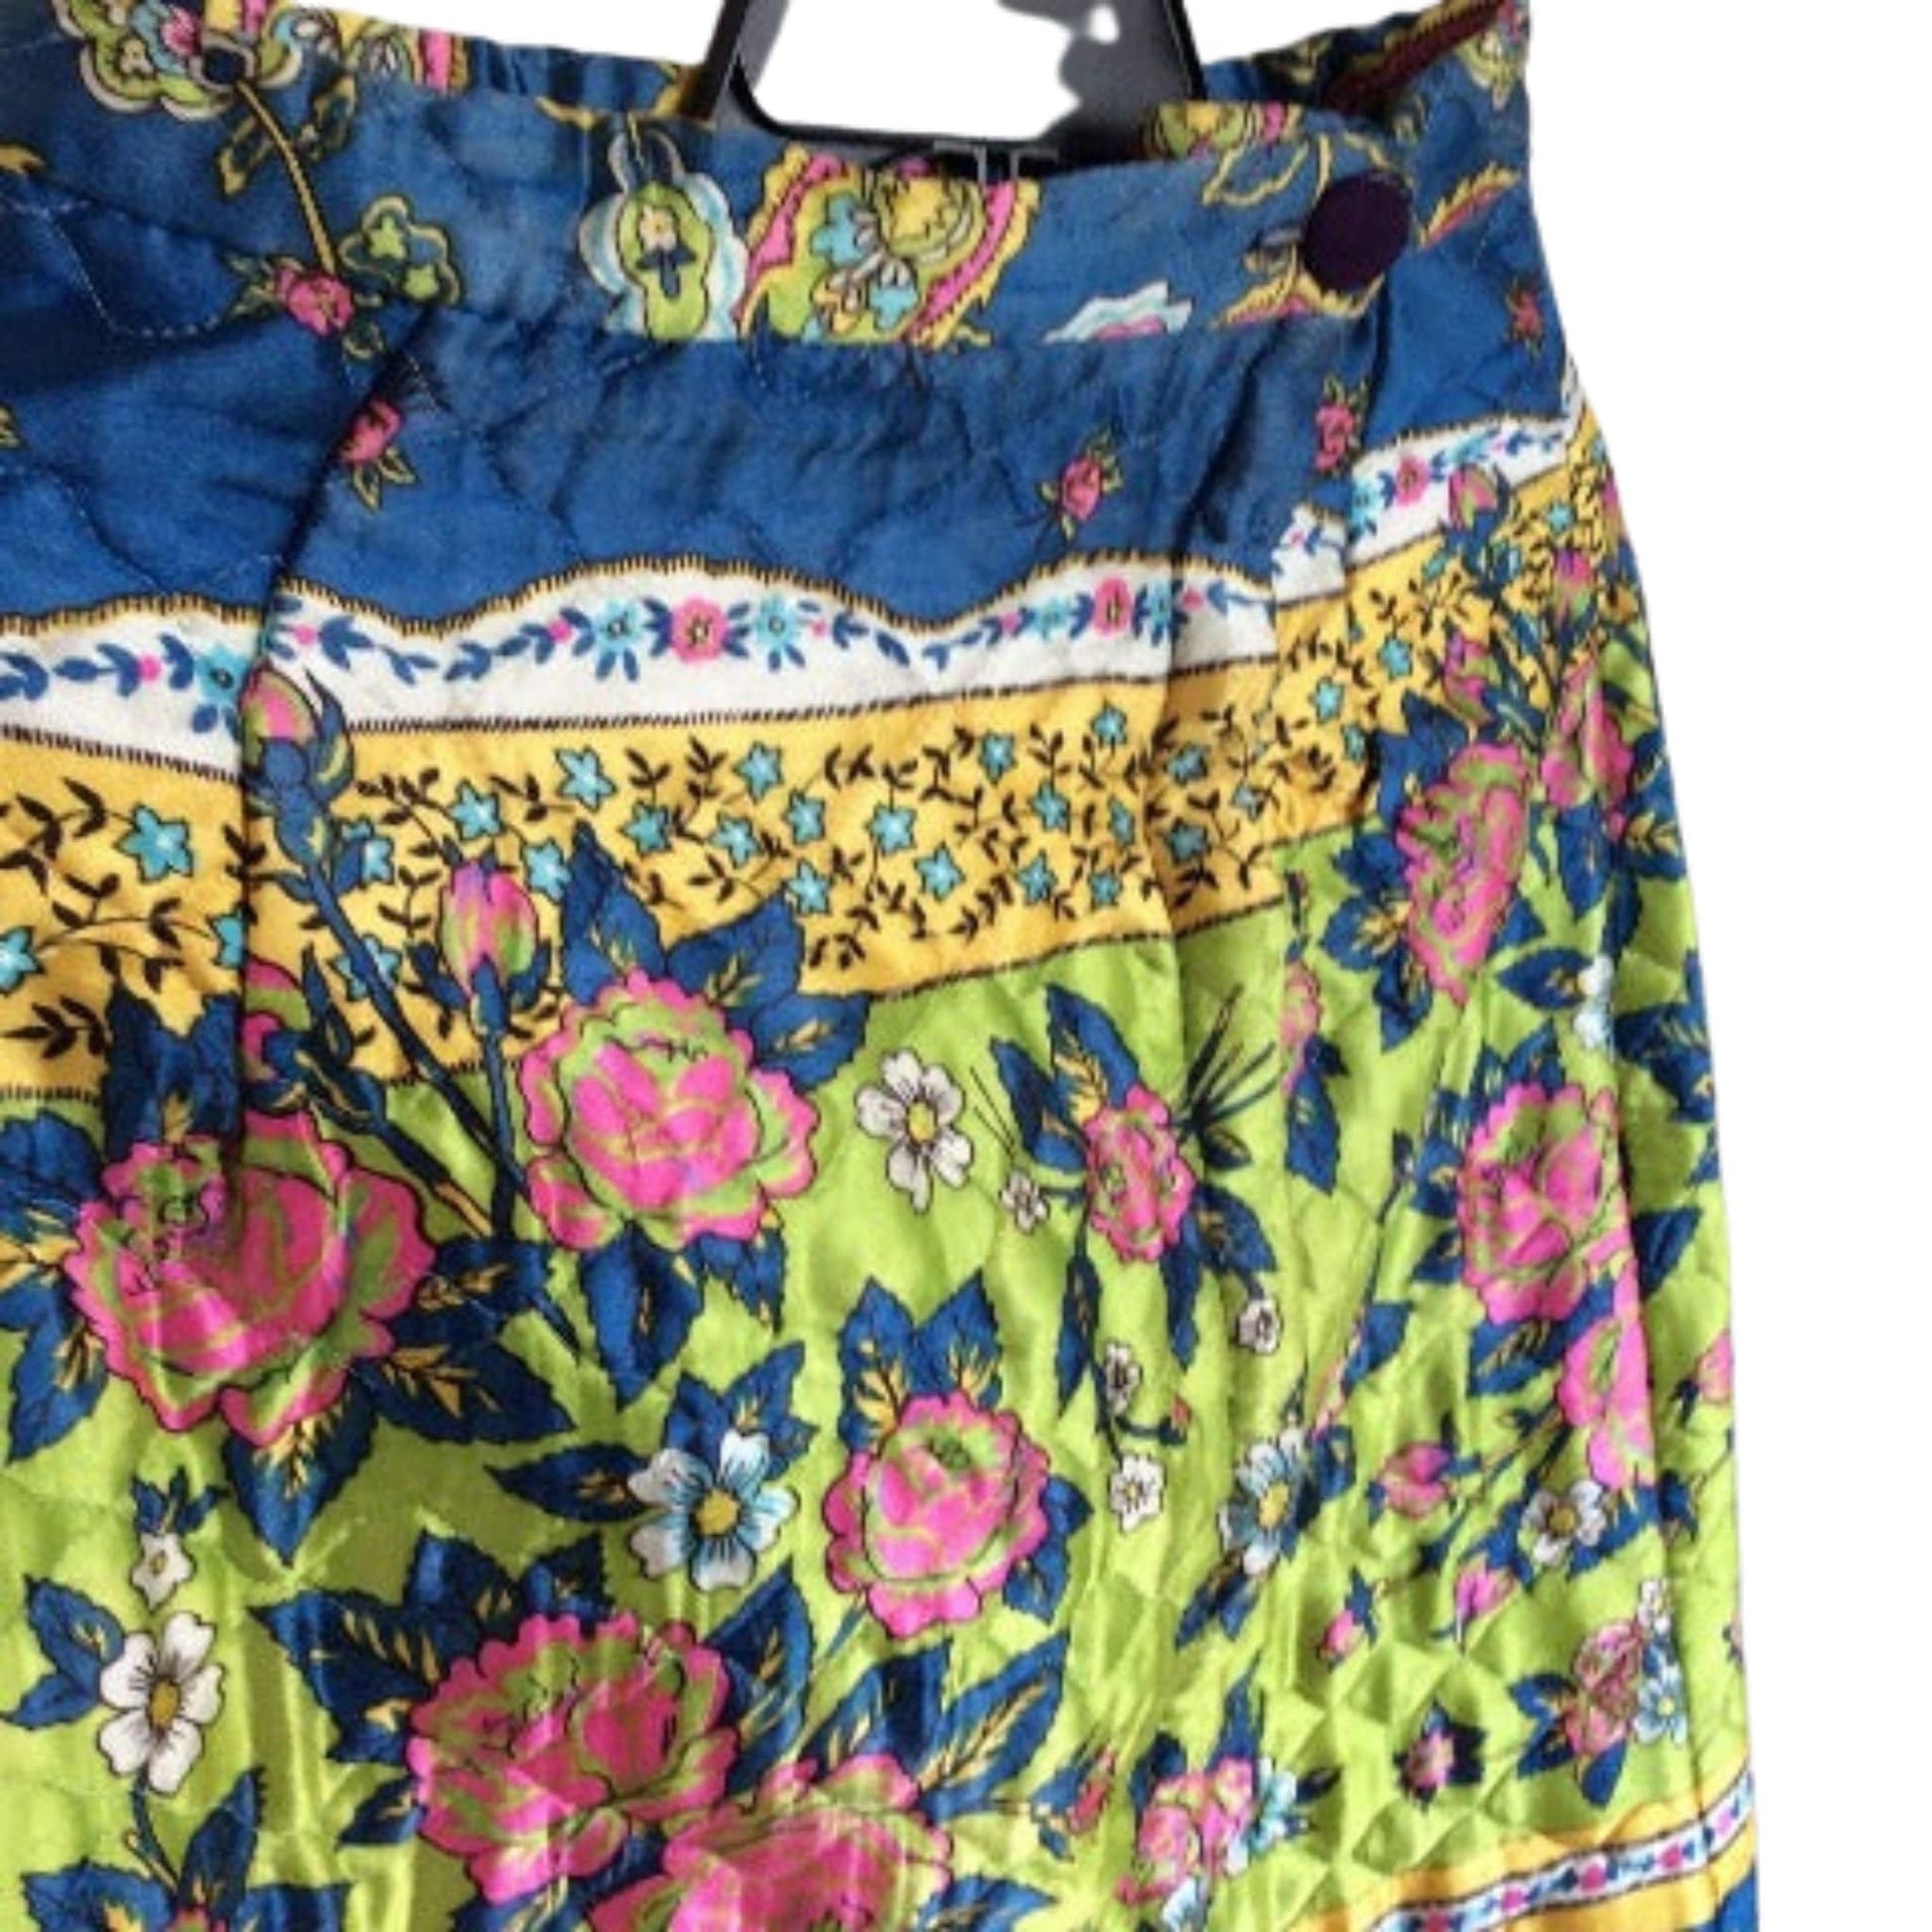 Vintage Long Quilted Skirt Medium / Multi / Vintage 1970s